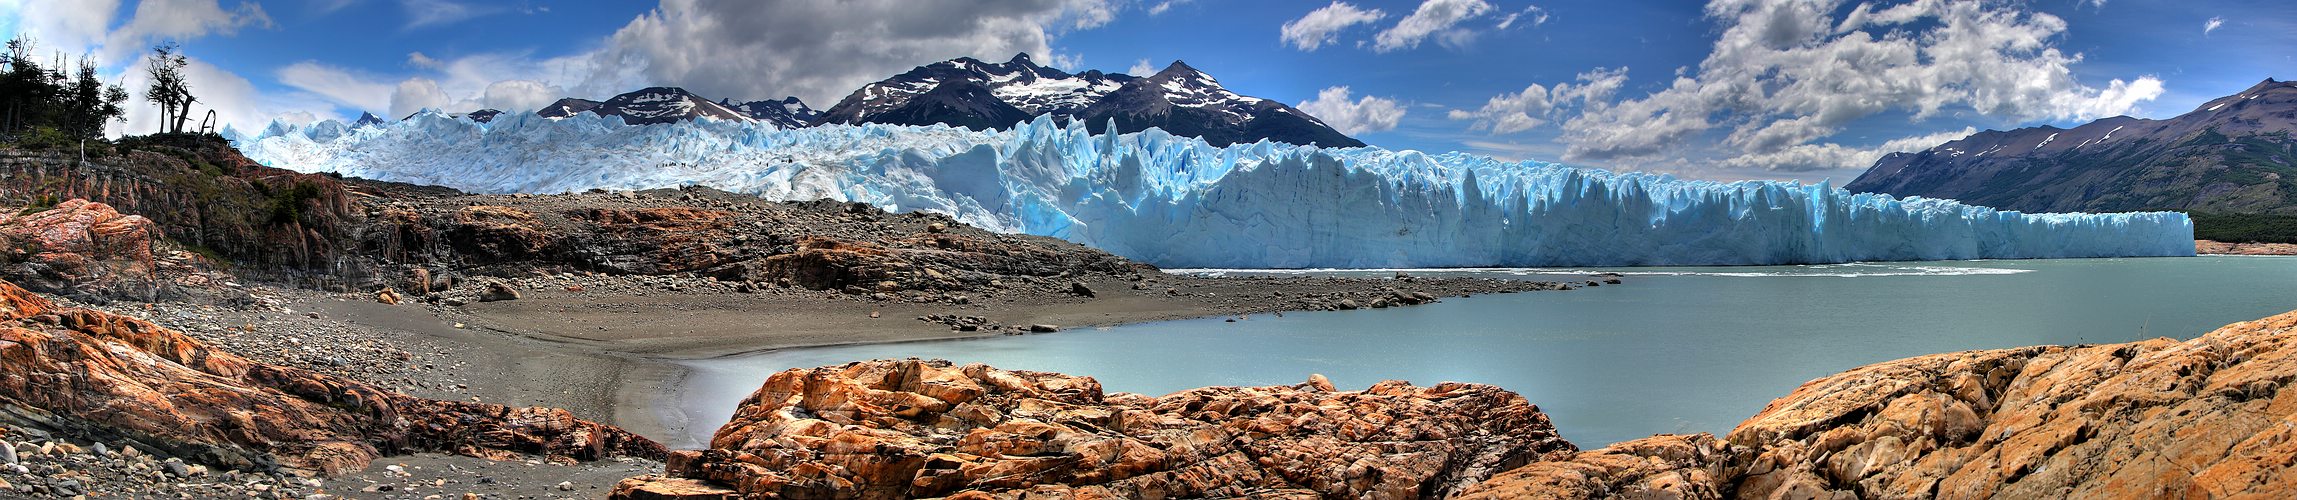 Argentinien (6) - Perito Moreno